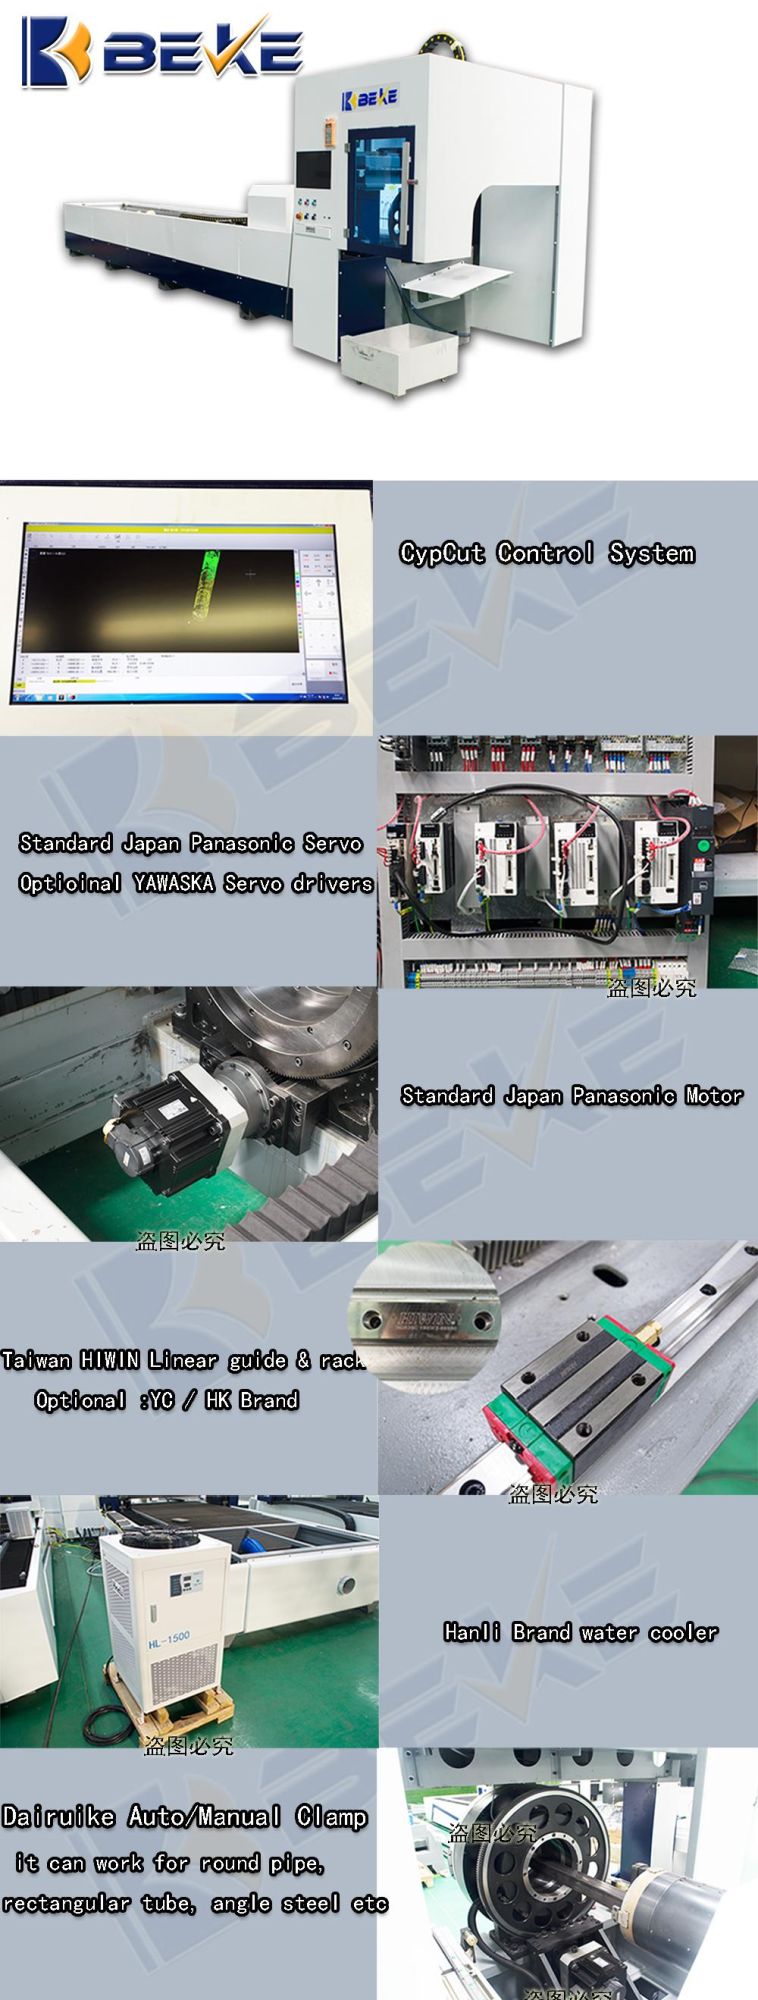 Beke 2000W Laser Source CNC Professional Pipe Laser Cutter Machine Price